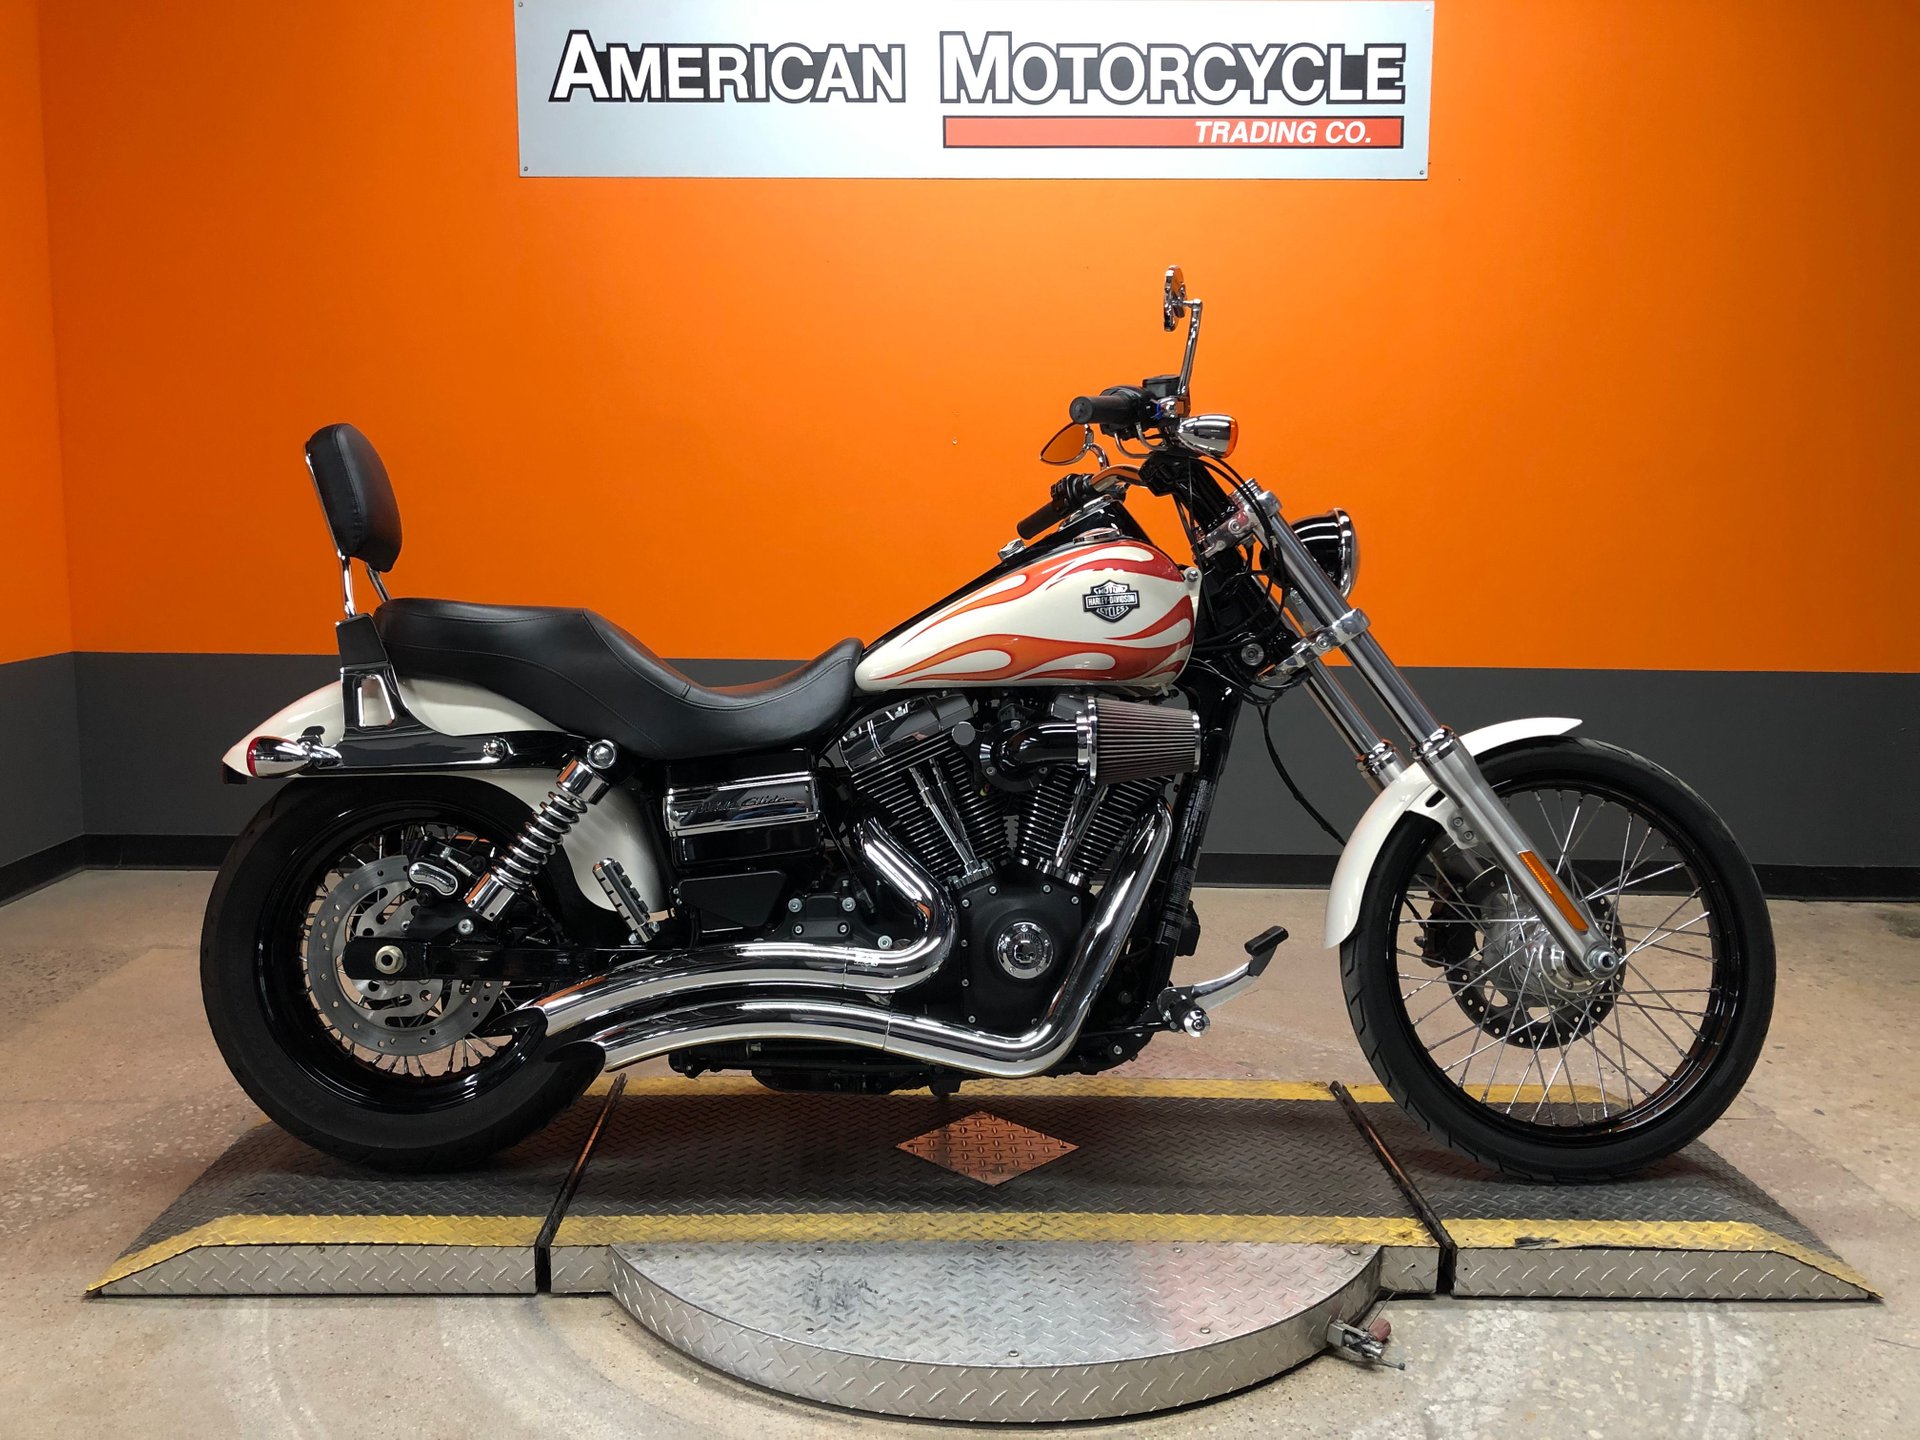 2014 Harley-Davidson Dyna Wide Glide | American Motorcycle Trading Company  - Used Harley Davidson Motorcycles